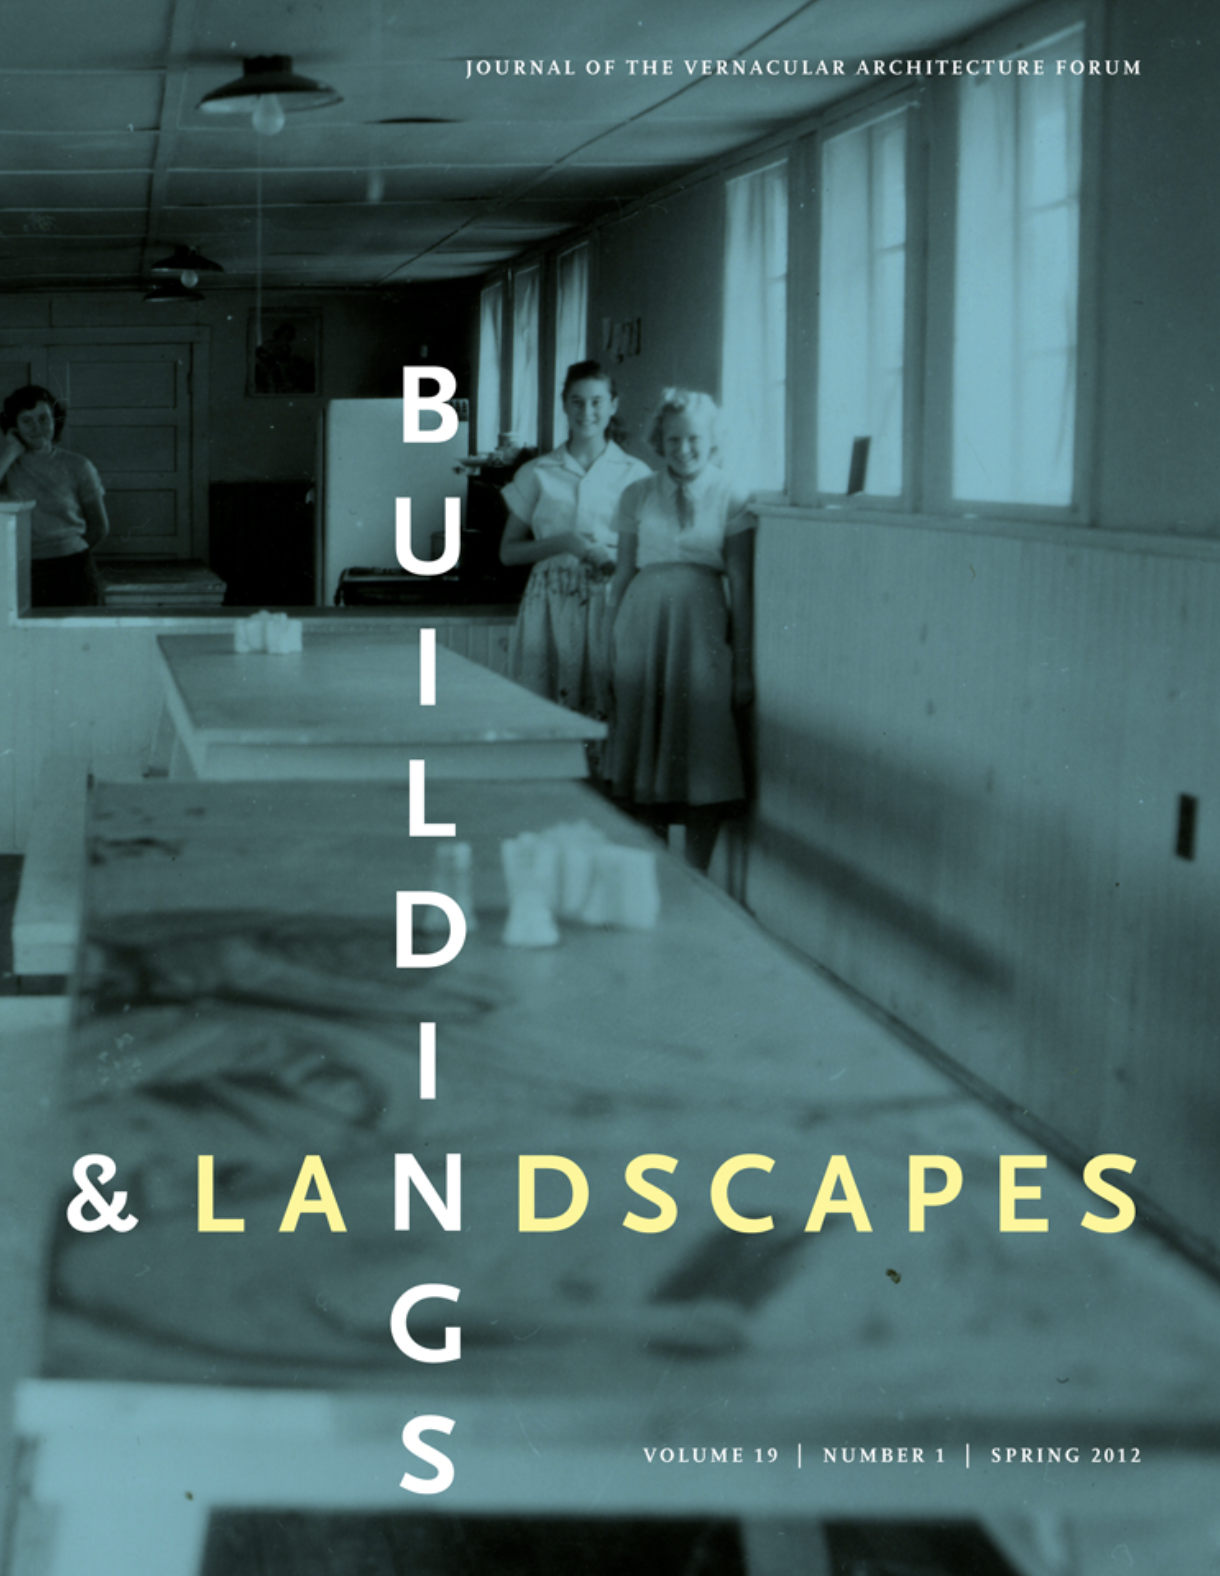 Buildings & Landscapes, Vol 19, No 1 (Spring 2012) cover.